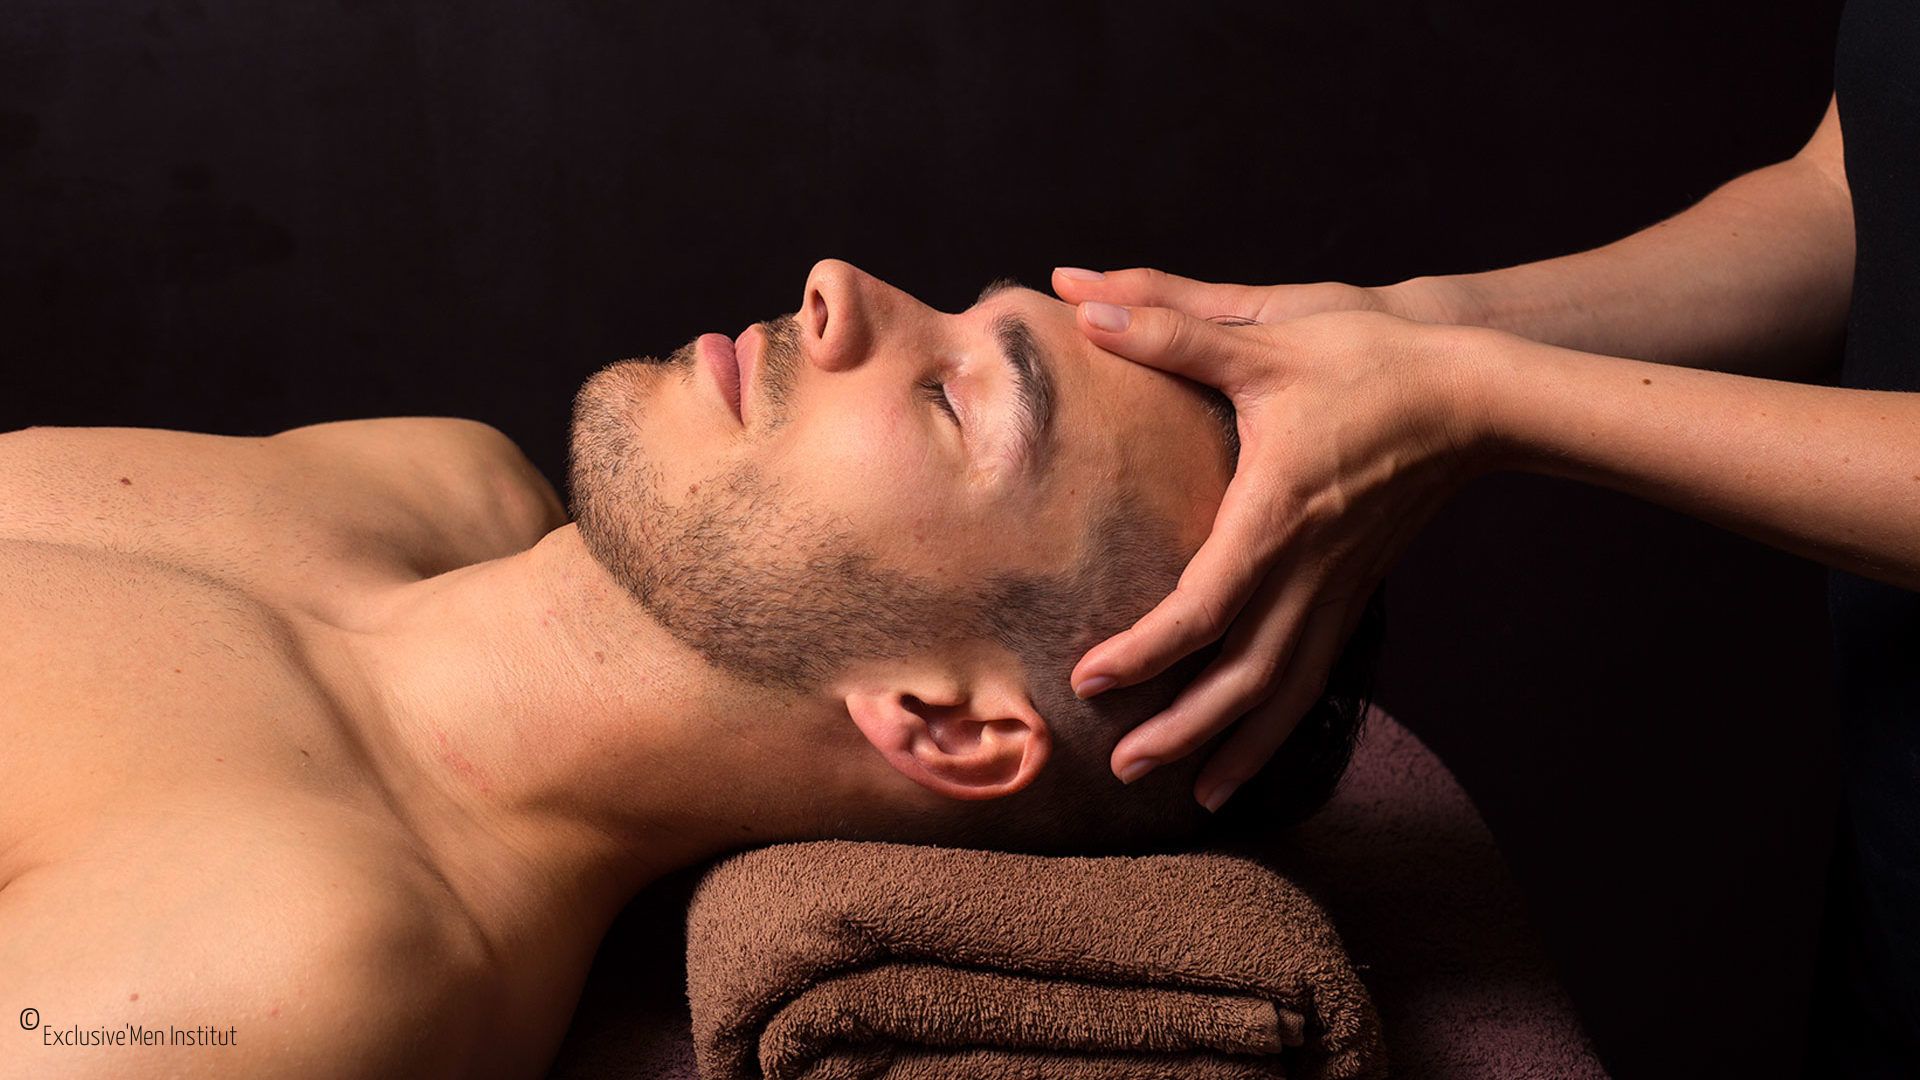 massage homme,massage sportif,massage relaxant homme,men institut,massage en duo